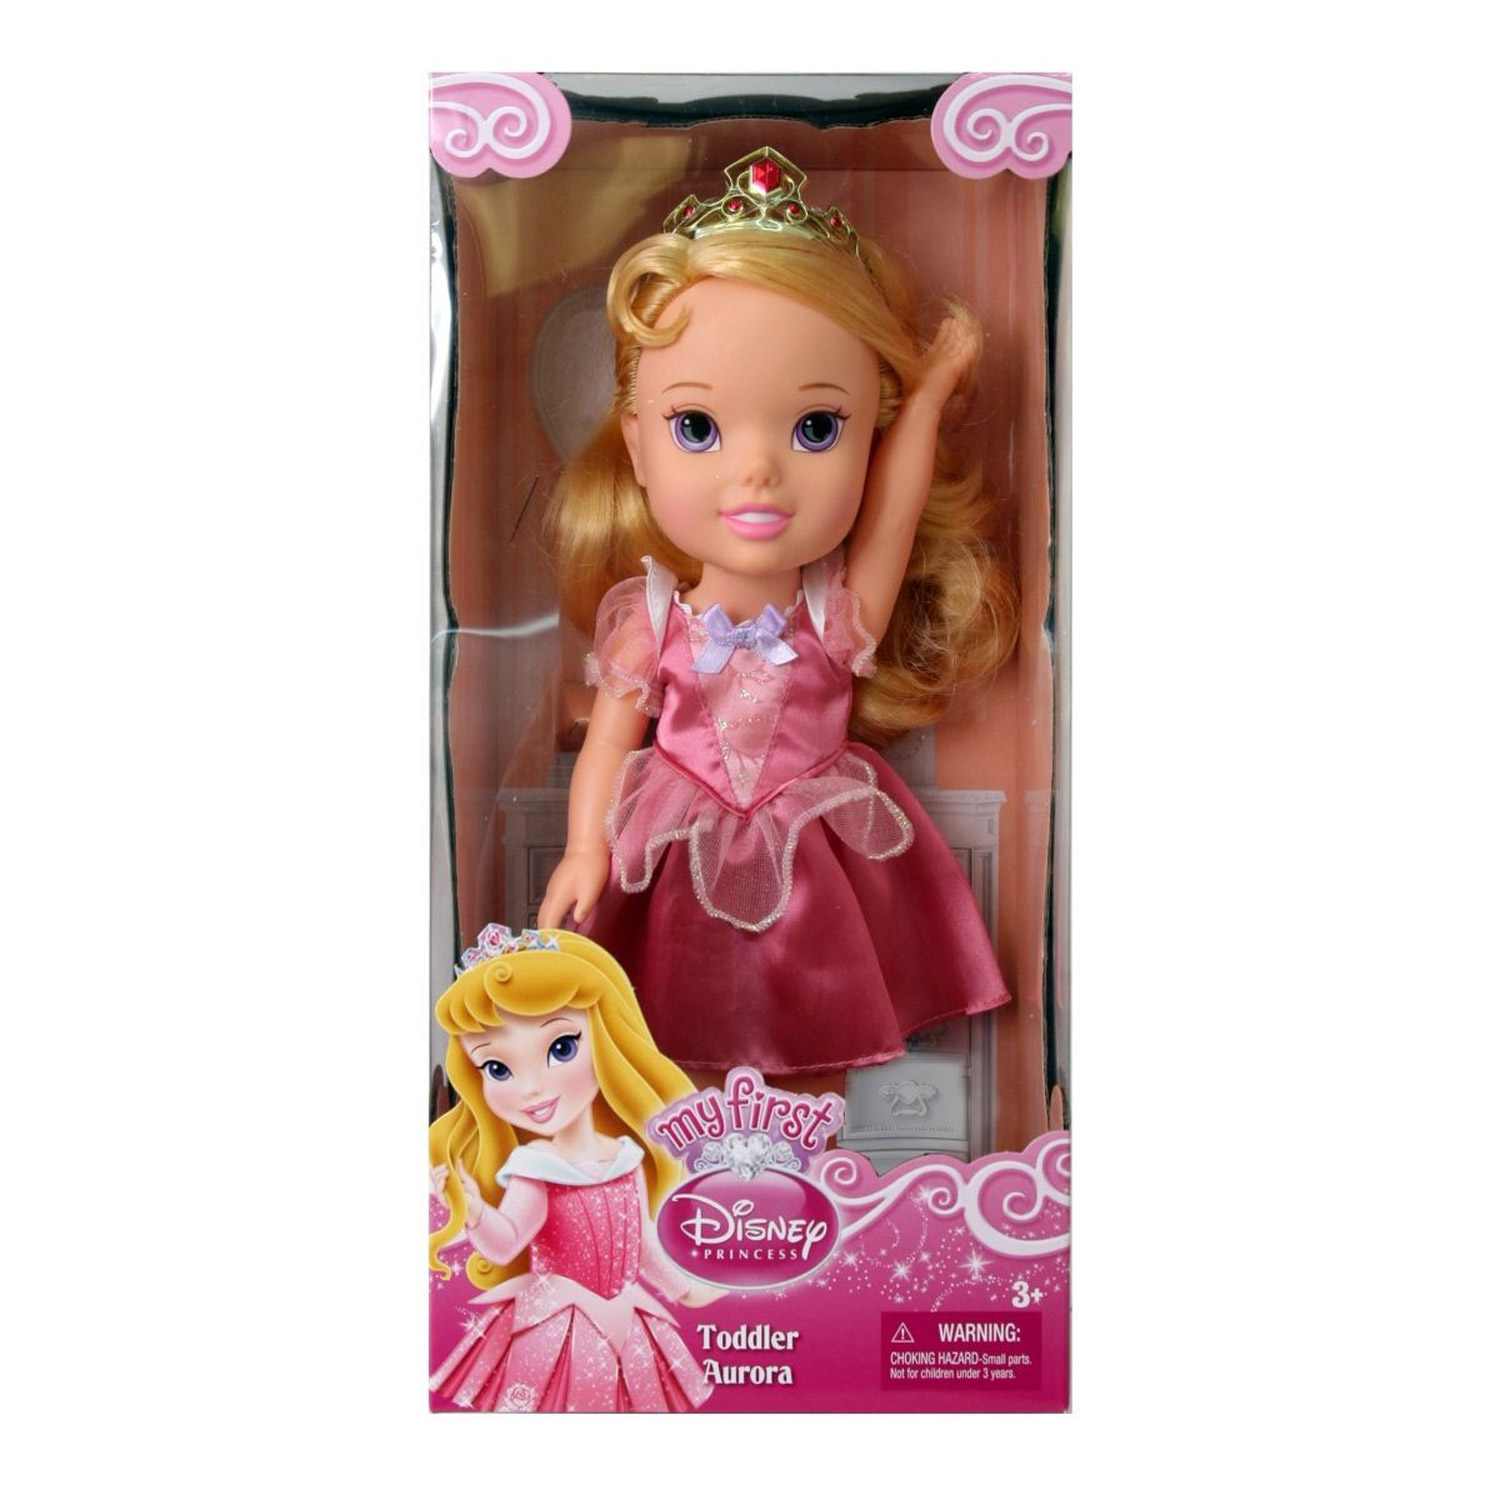 Принцесса малышка s класса. Кукла 31 см принцесса Дисней малышка, 751170. Кукла Disney принцесса малышка 31 см 75122 751170. Куклы Дисней малышки my first Ариа.